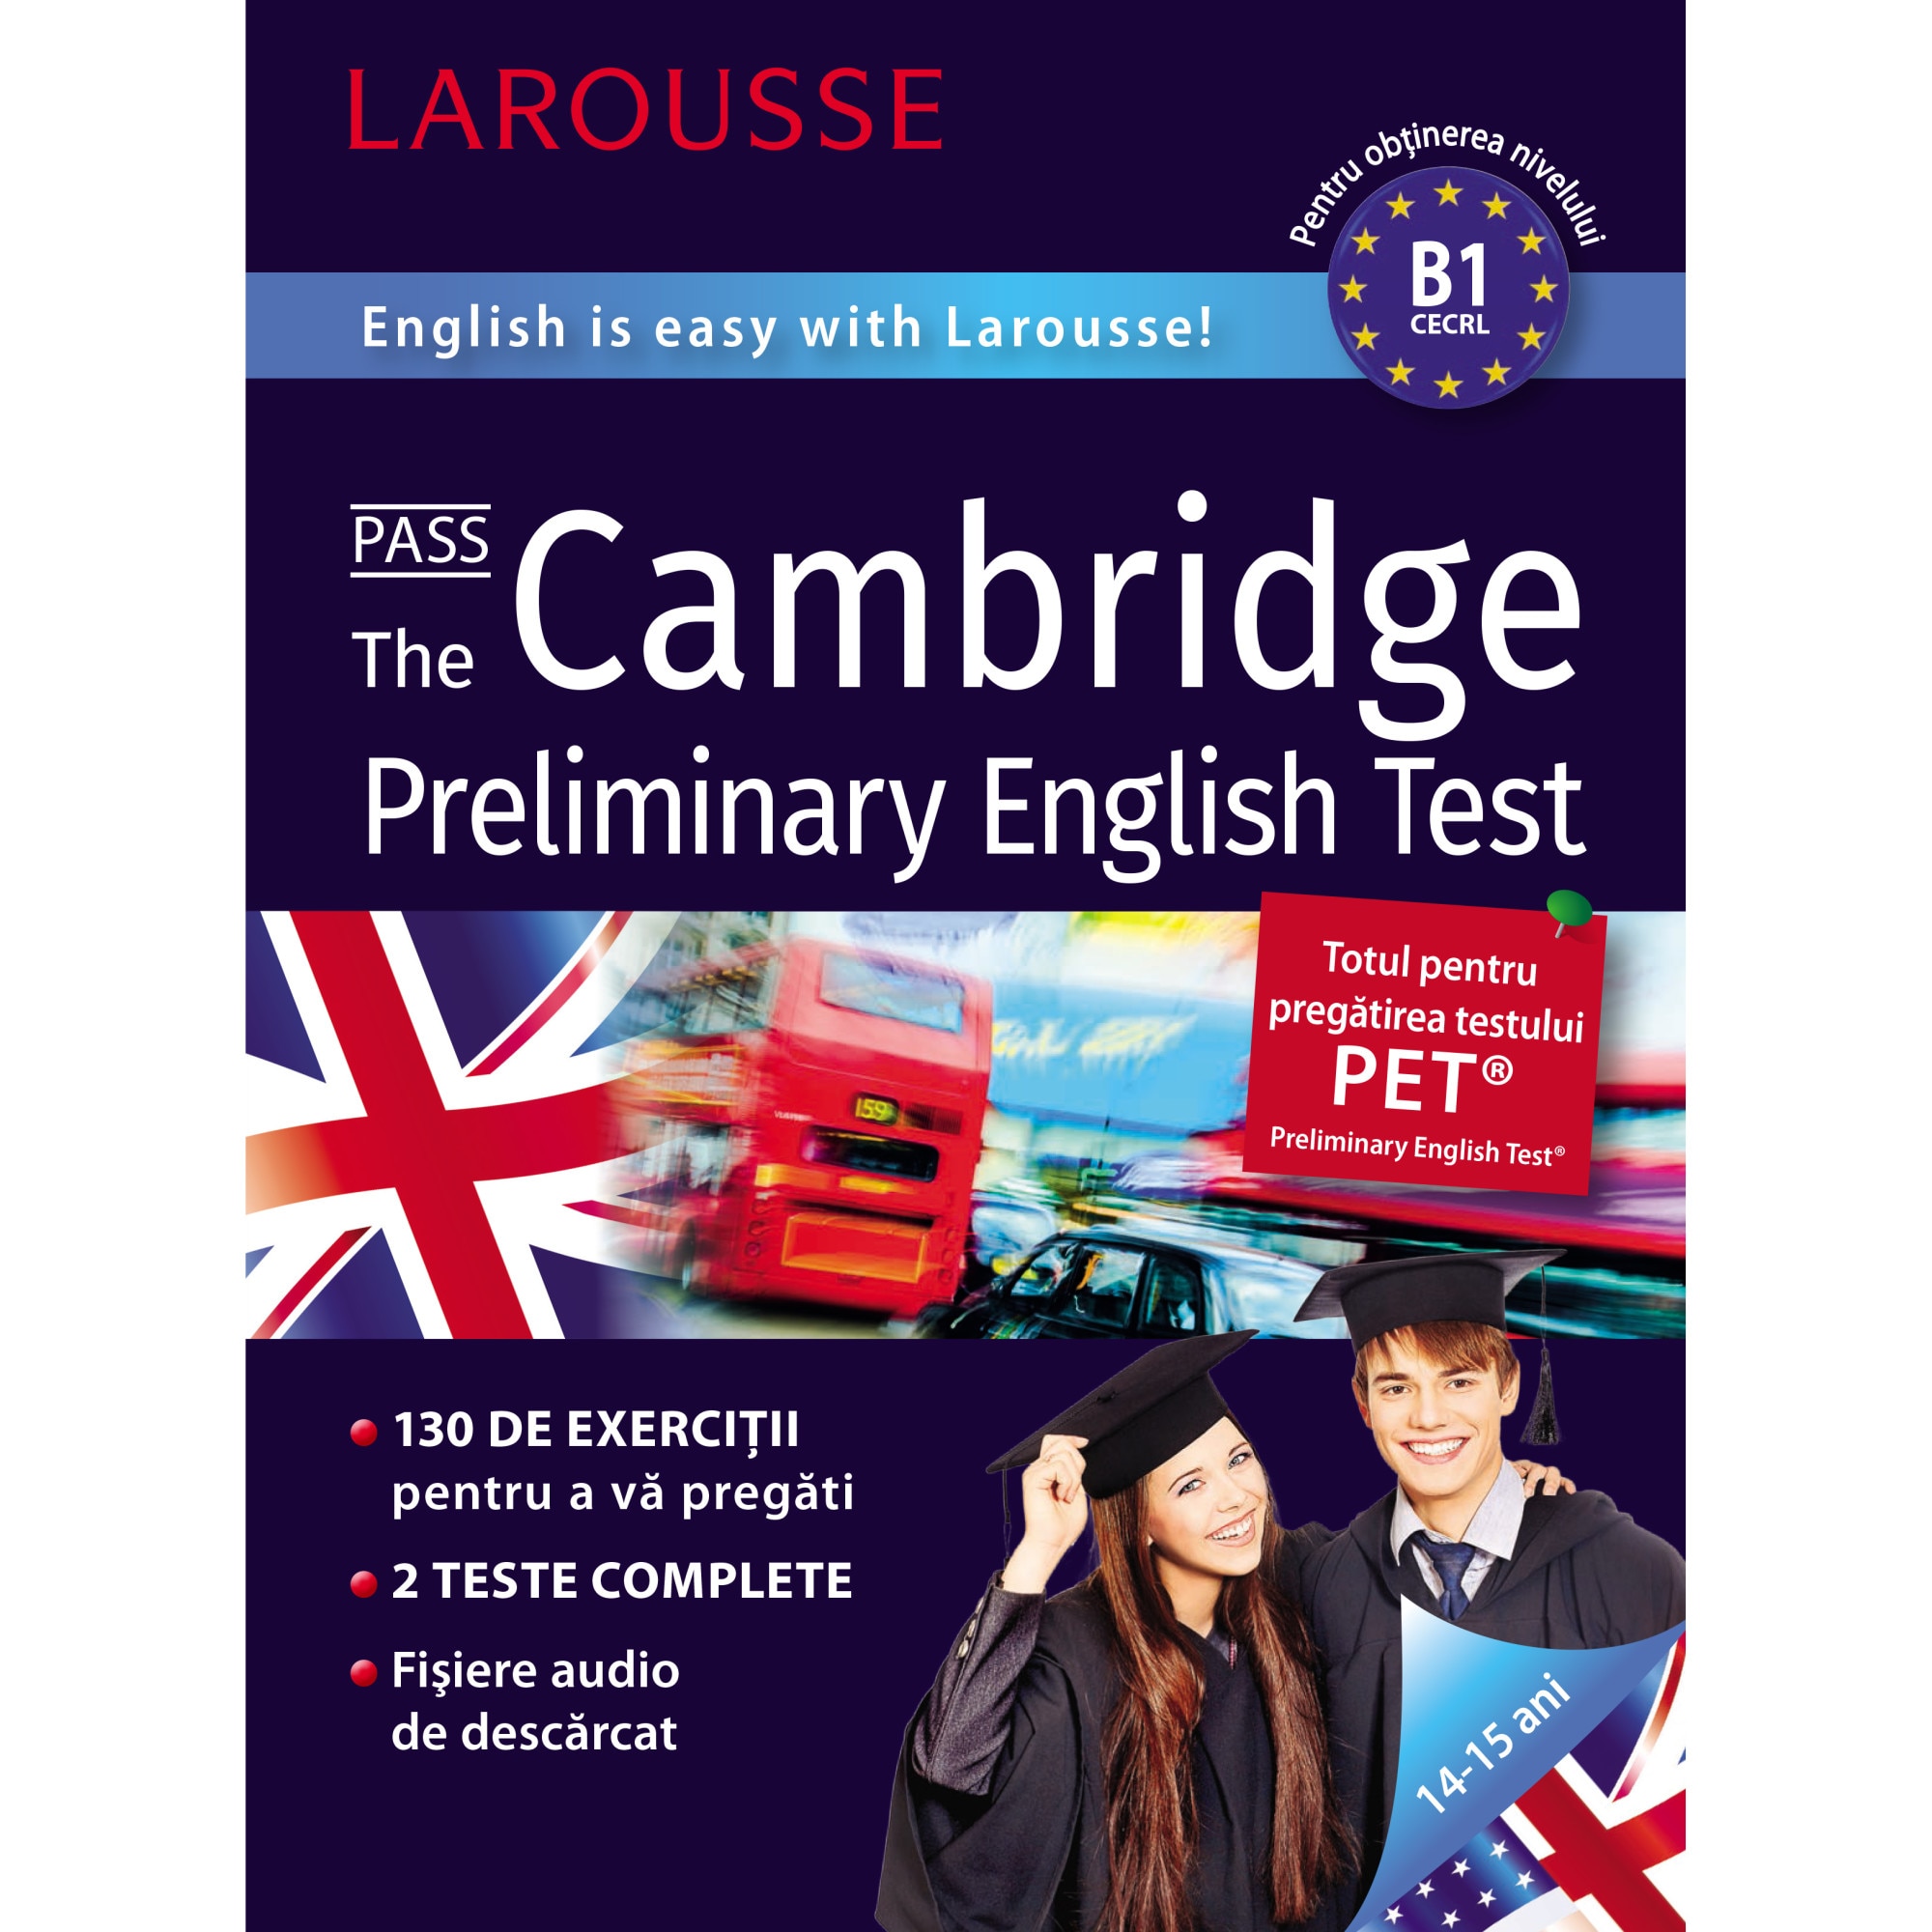 Pet cambridge. Preliminary English Test. Cambridge English preliminary. Cambridge preliminary English Test 1. Кембриджский словарь английского языка.